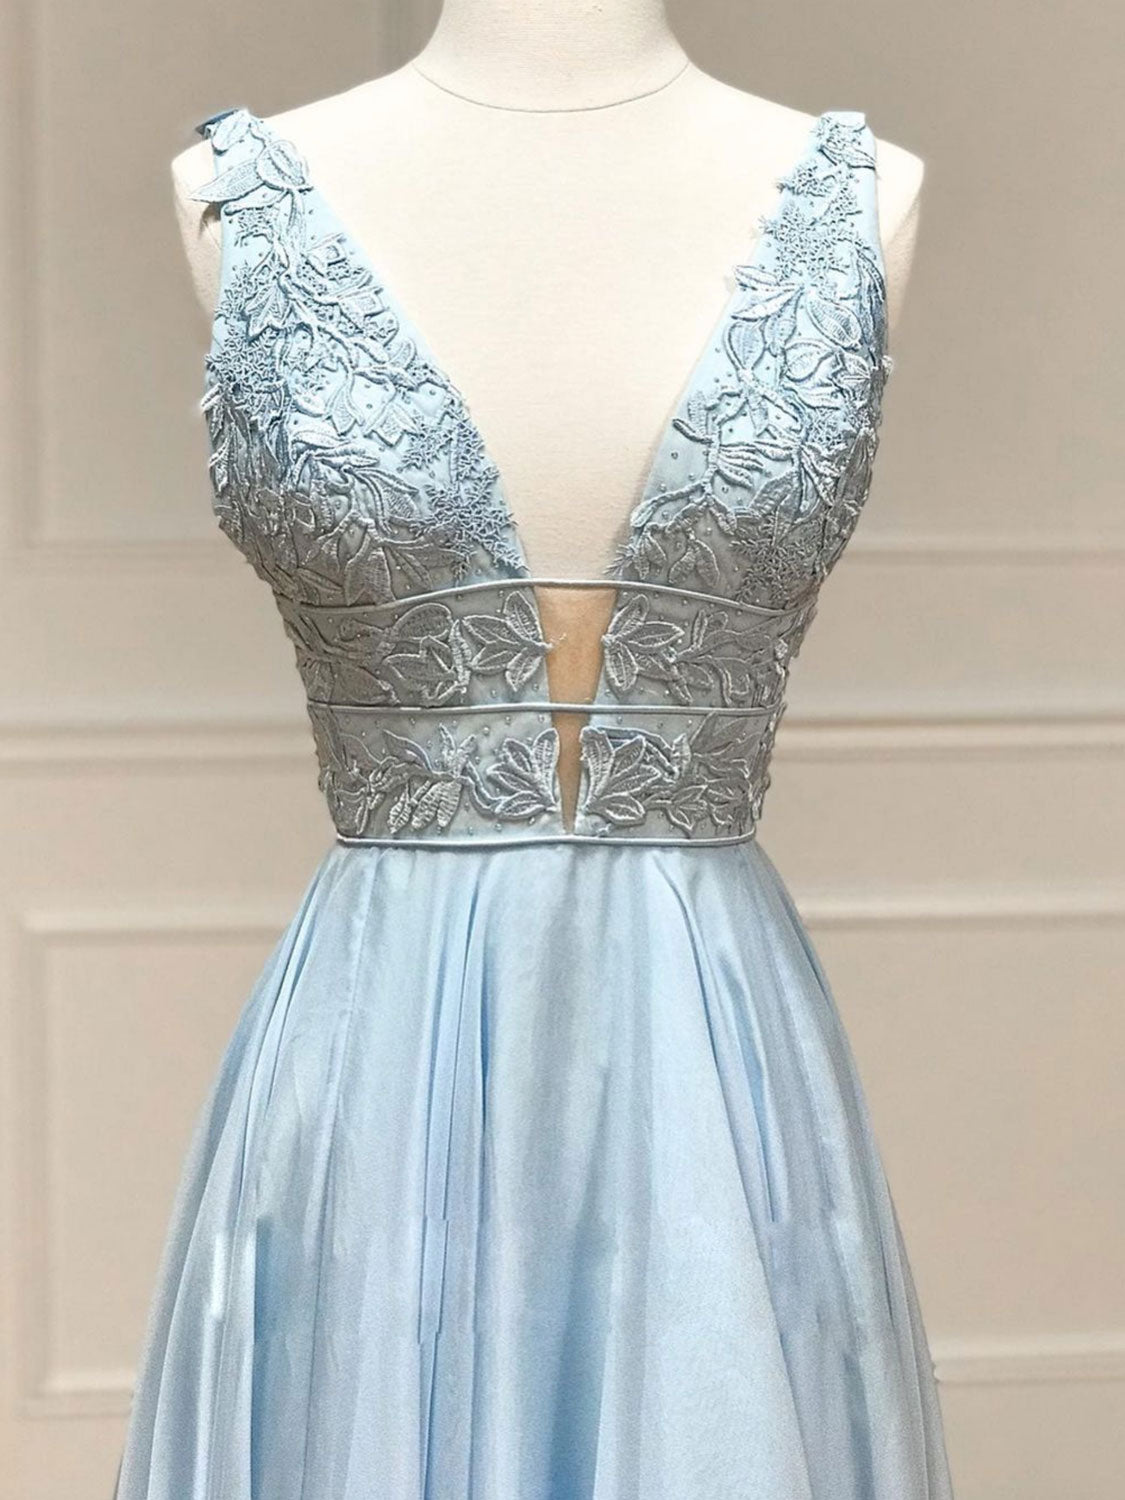 Blue v neck chiffon lace long prom dress, blue evening dress